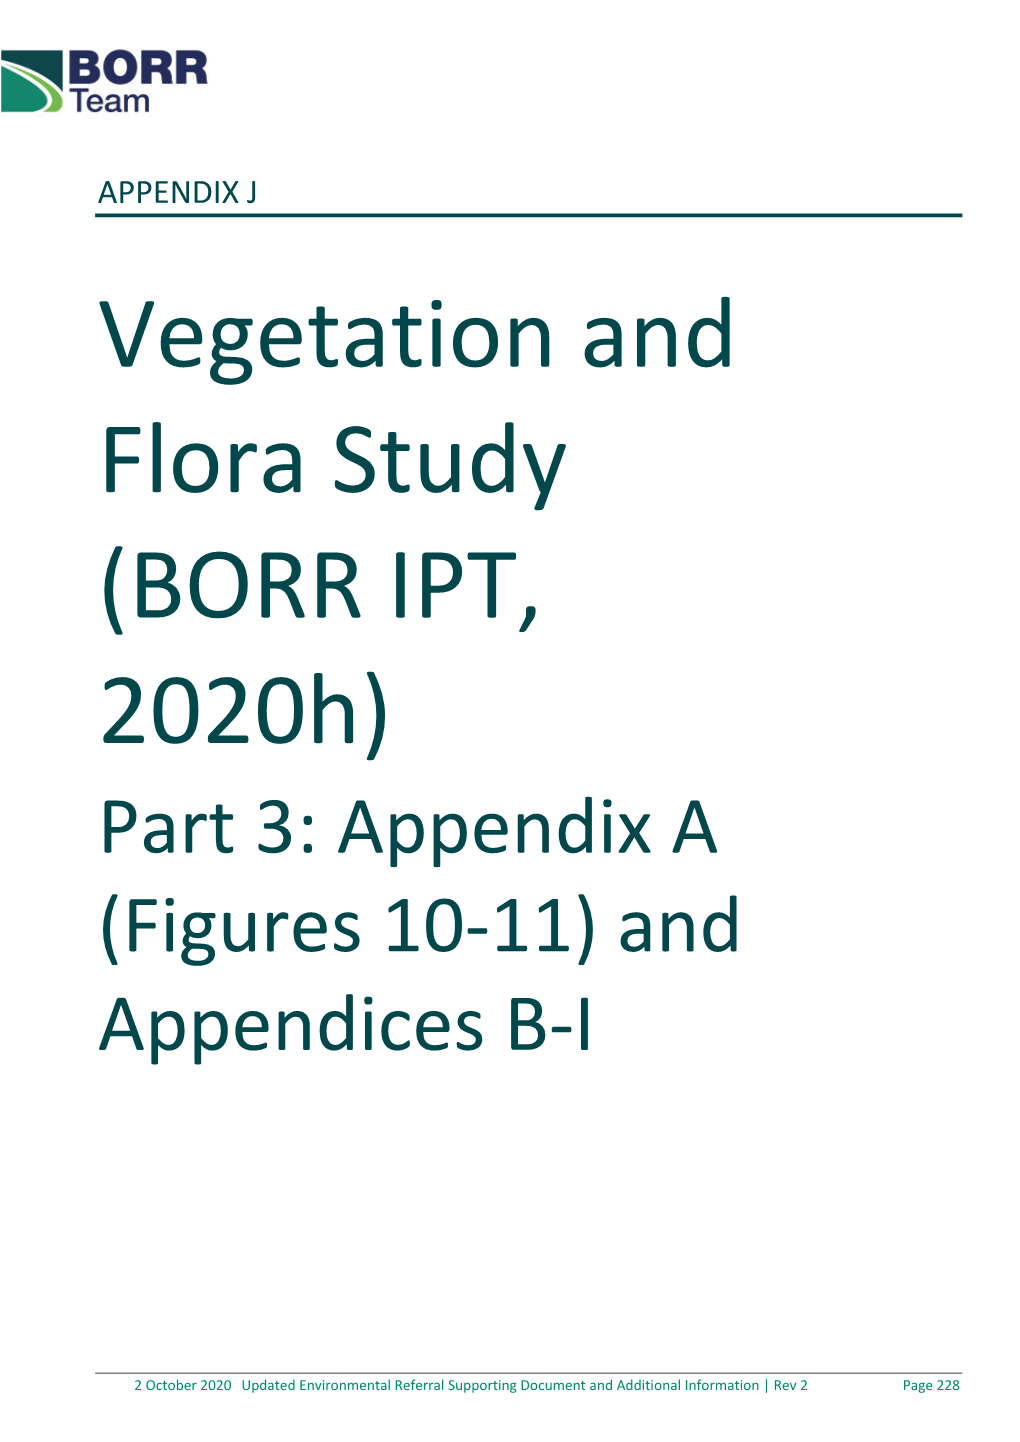 Vegetation and Flora Study (BORR IPT, 2020H) Part 3: Appendix a (Figures 10-11) and Appendices B-I